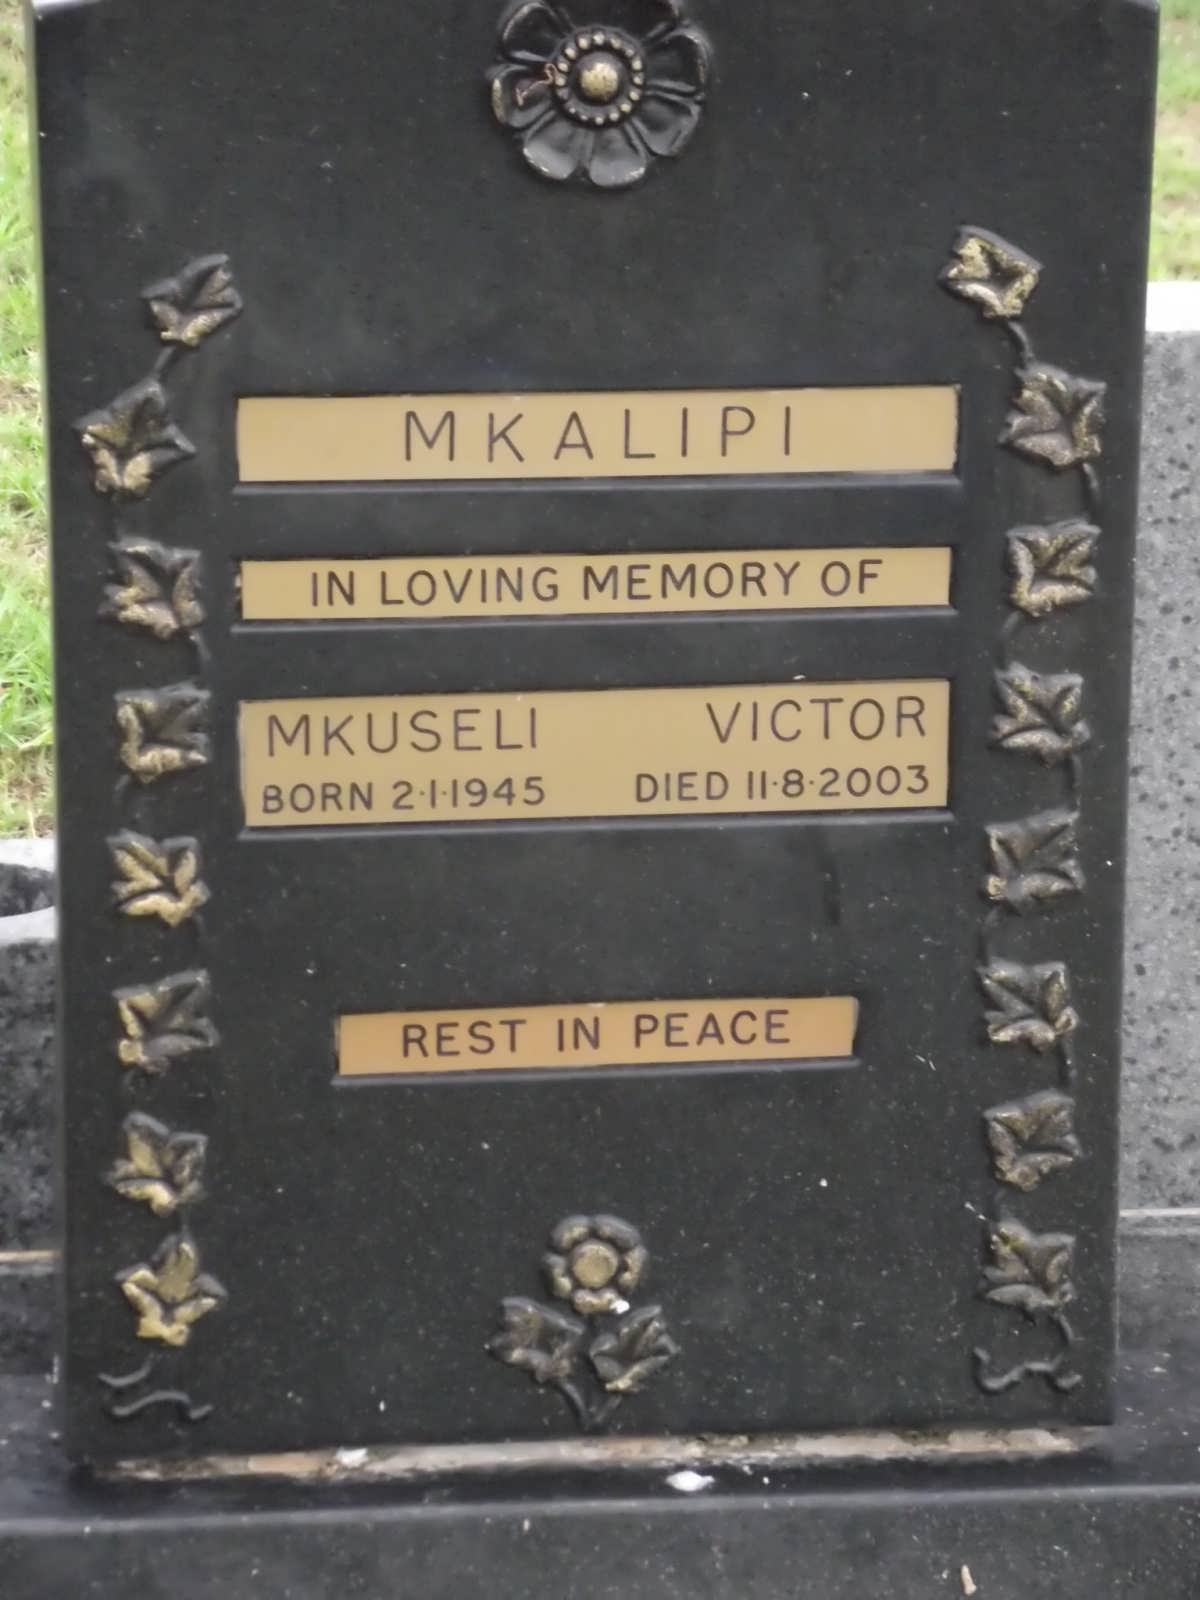 MKALIPI Mkuseli Victor 1945-2003